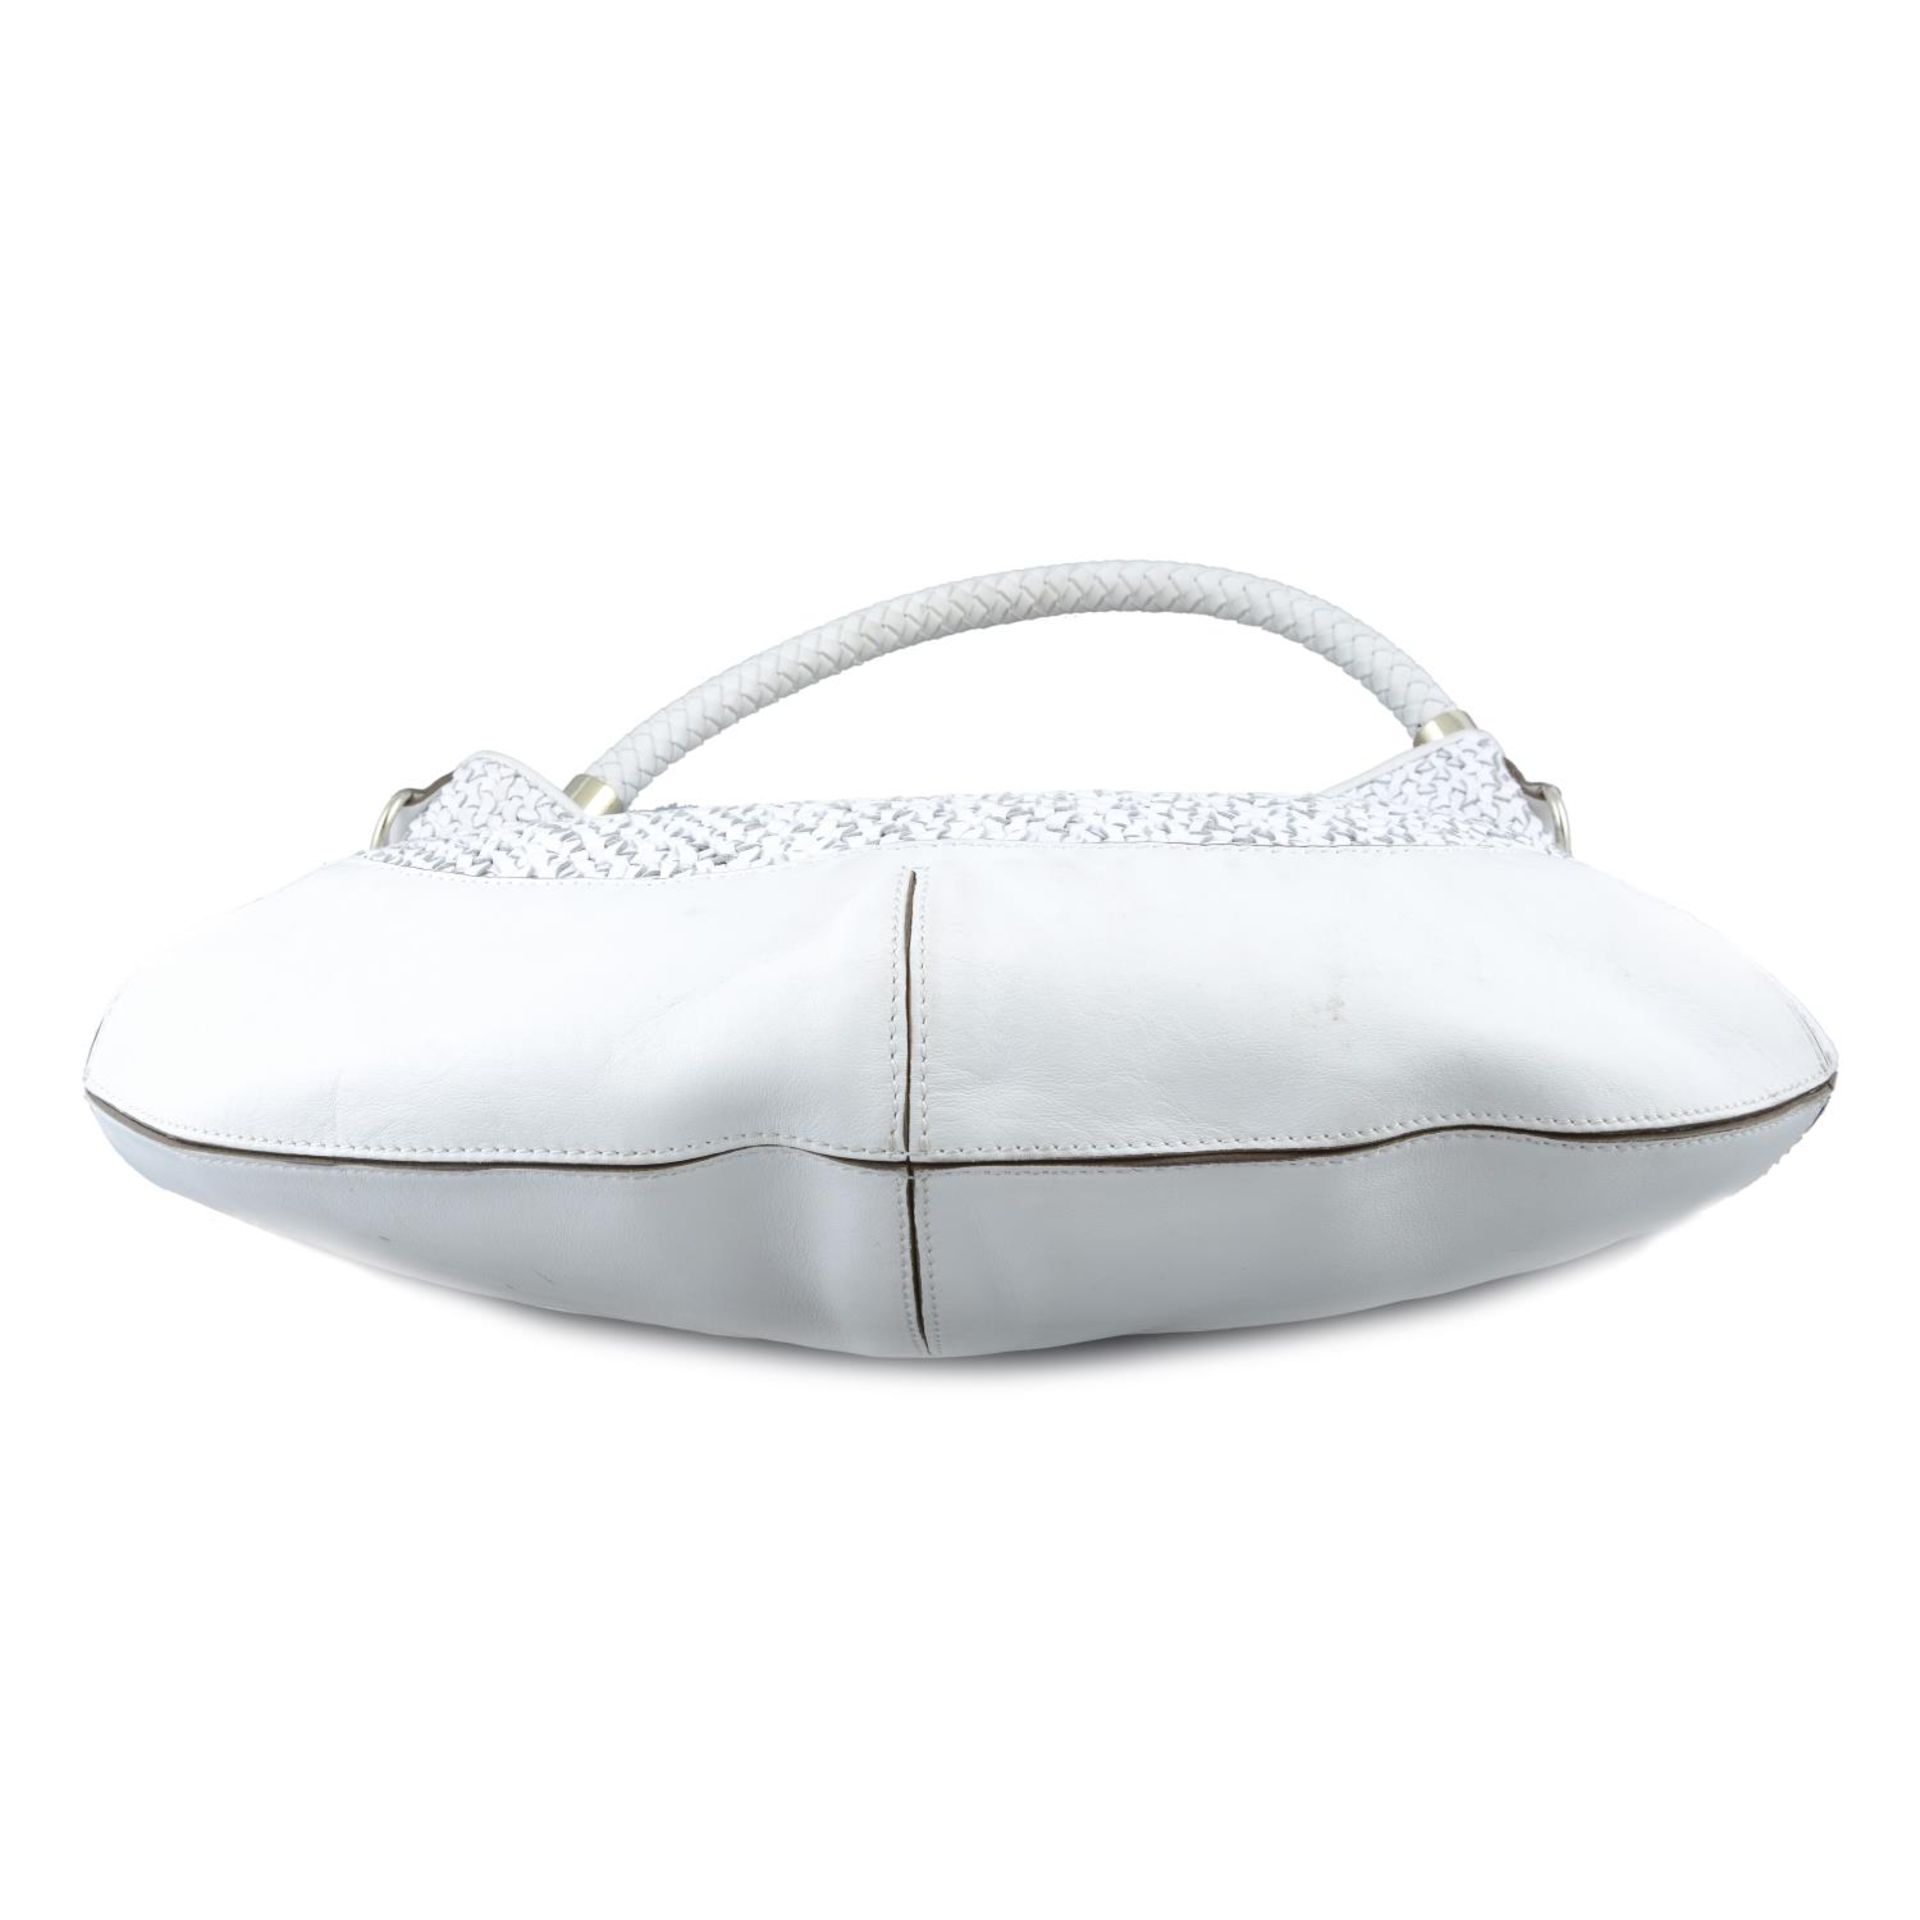 ANYA HINDMARCH - a white leather Jethro Hobo handbag. - Image 2 of 5